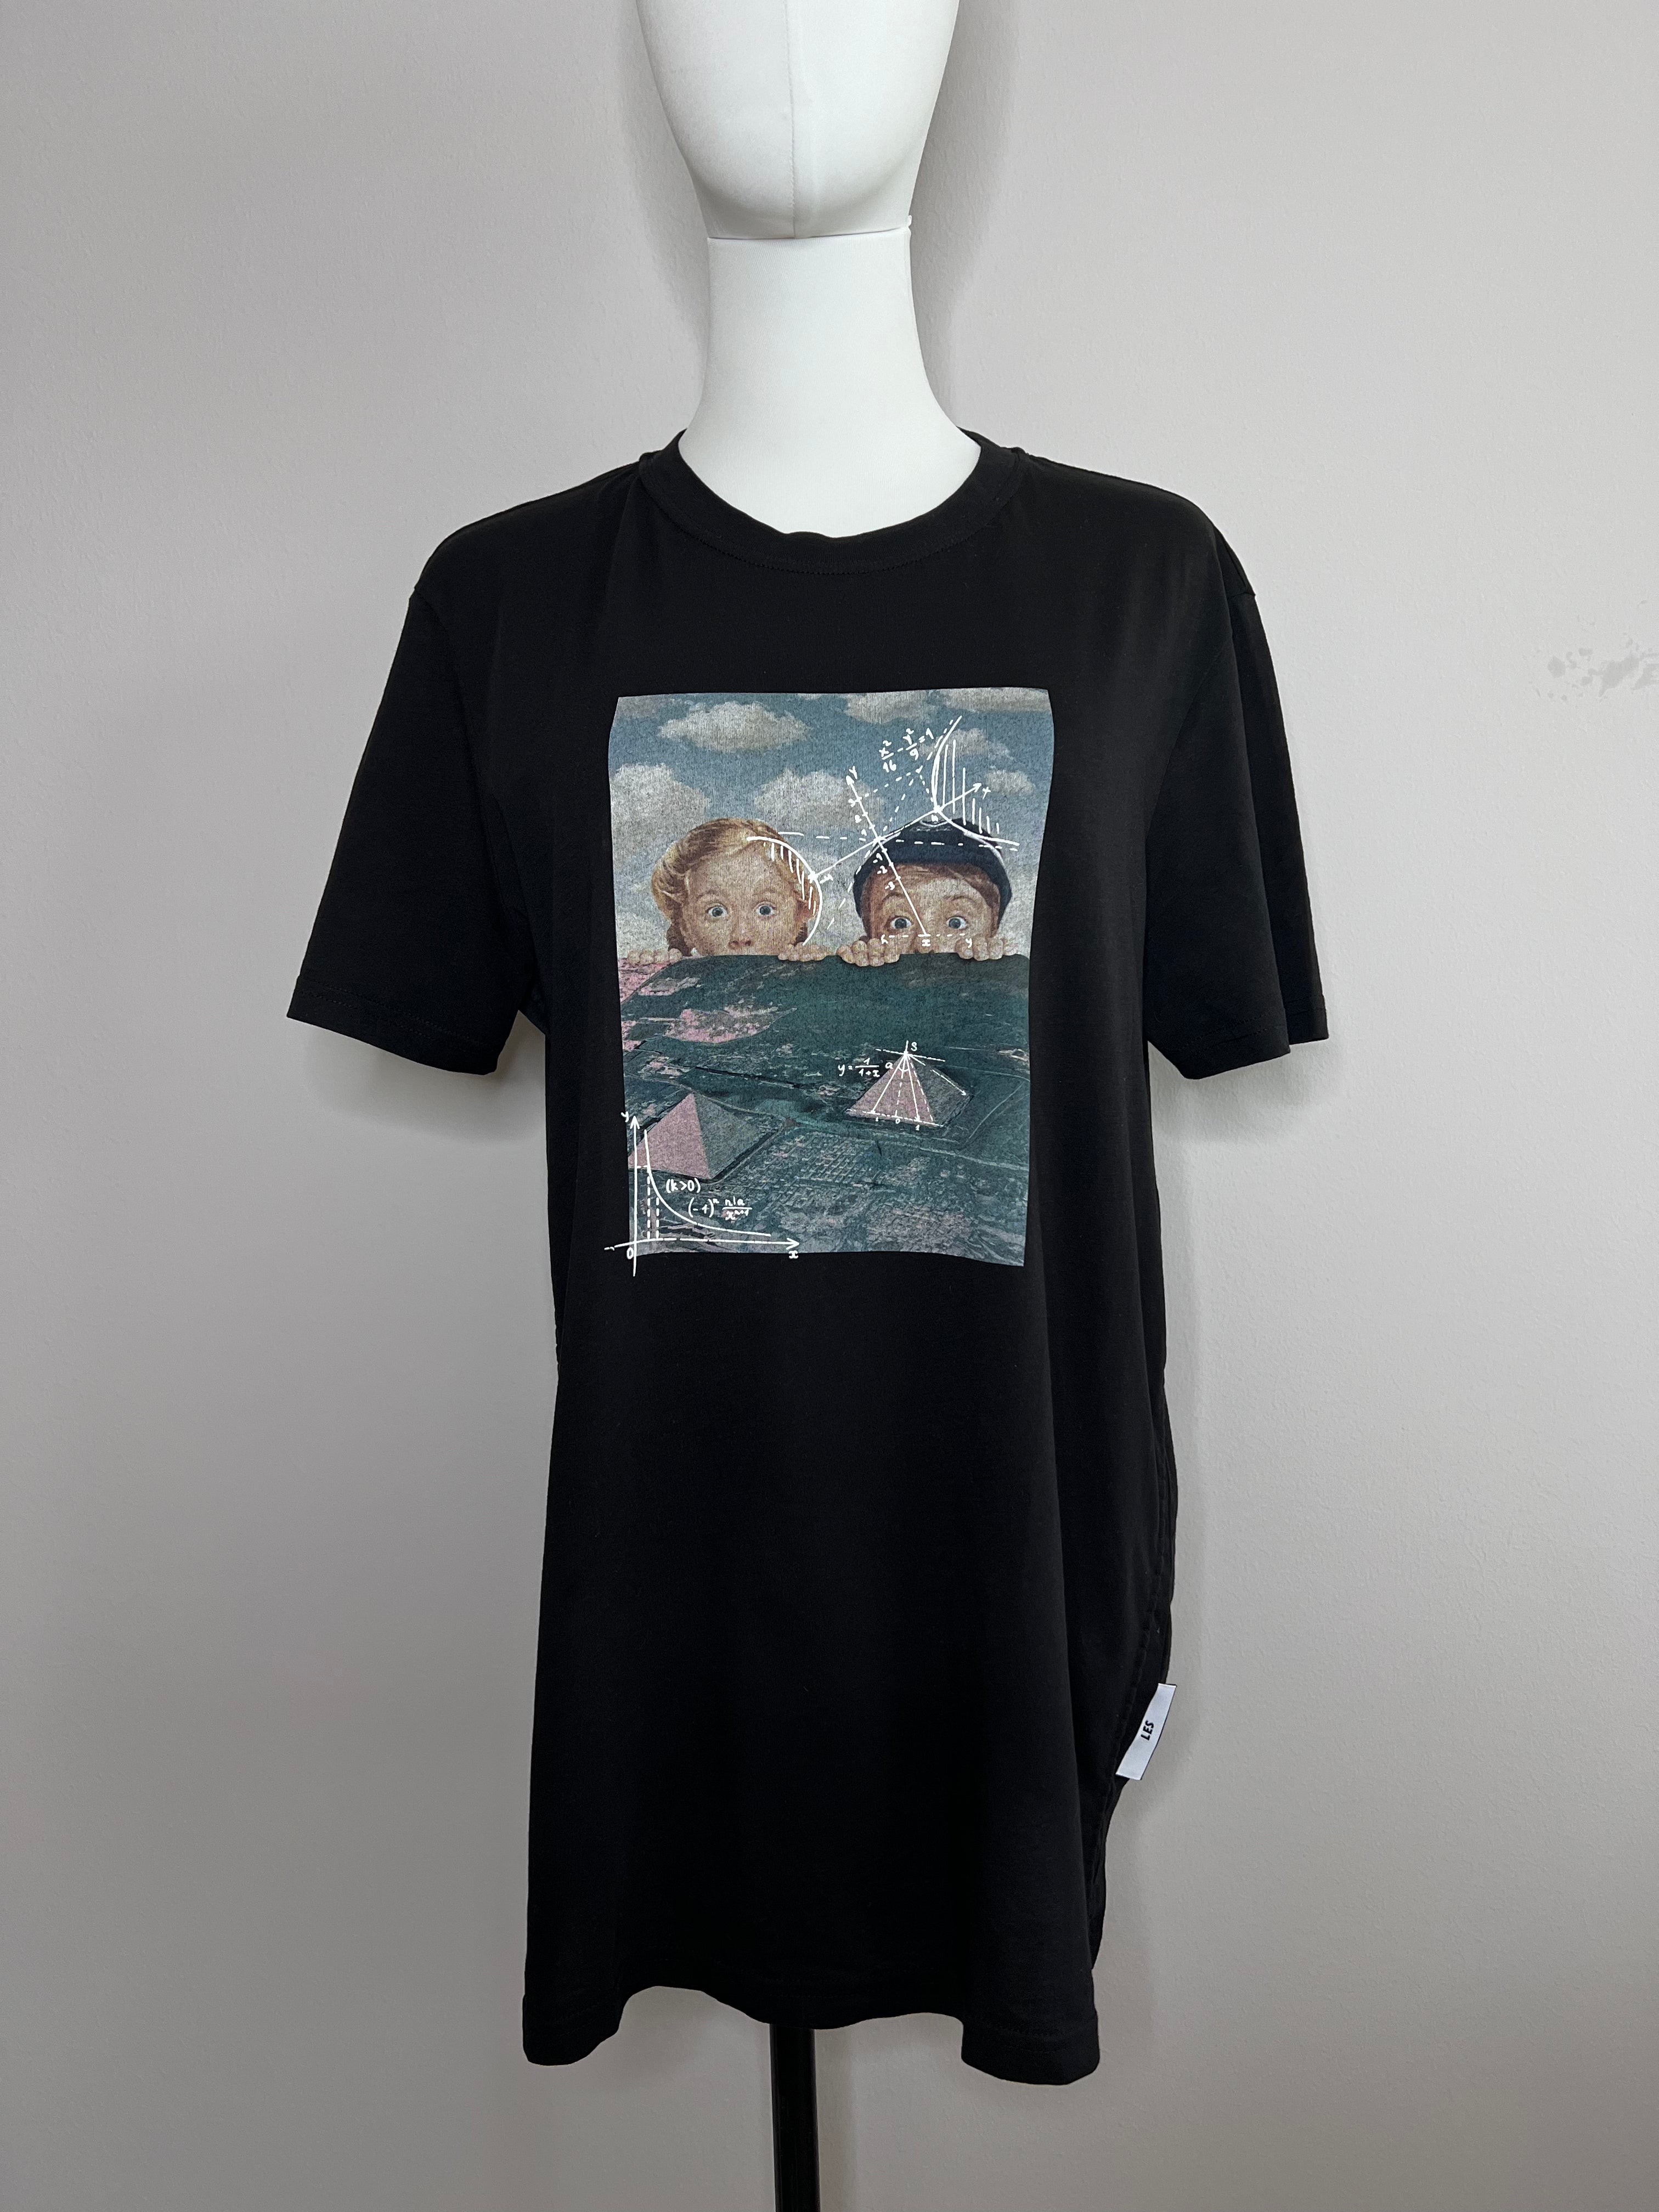 Printed black tee cotton shirt - LES BENJAMINS